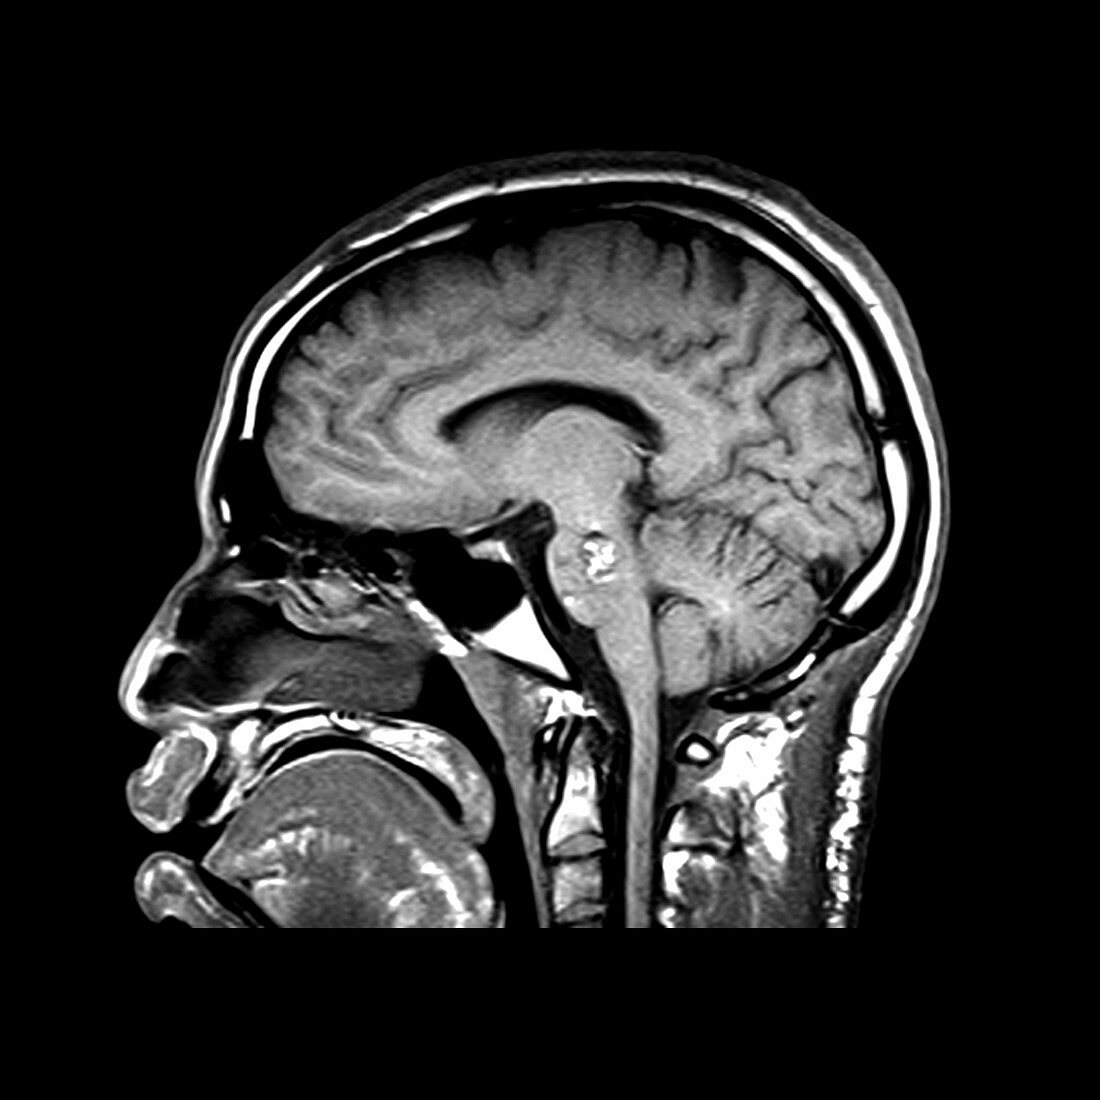 Sagital Cross Sectional MRI of the Brain